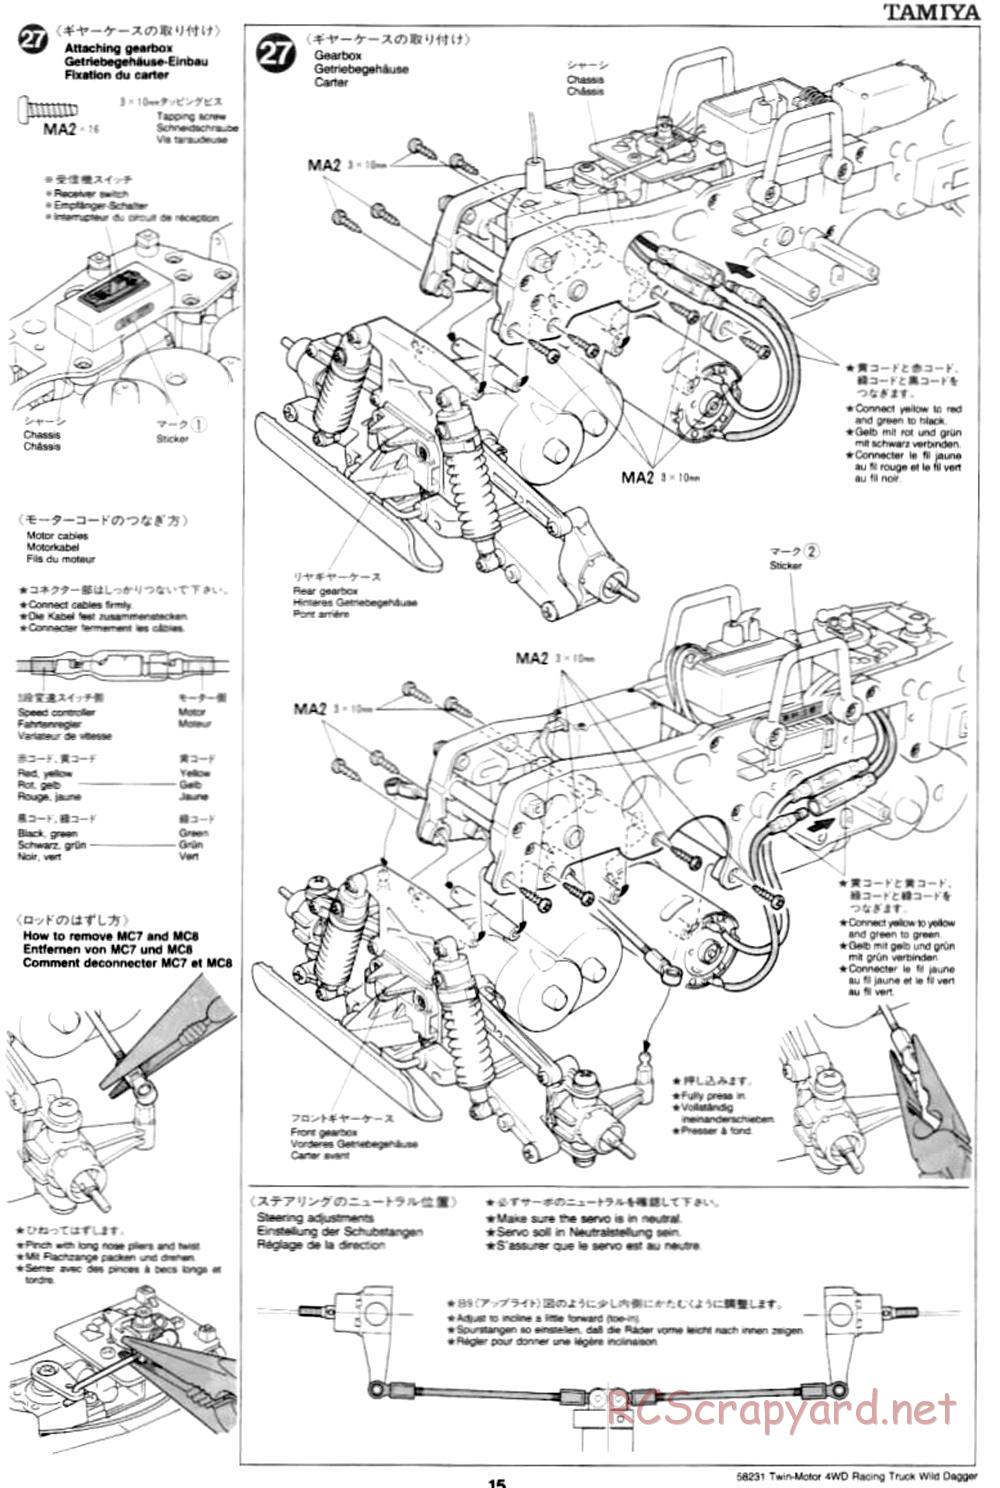 Tamiya - Wild Dagger - WR-01 Chassis - Manual - Page 15